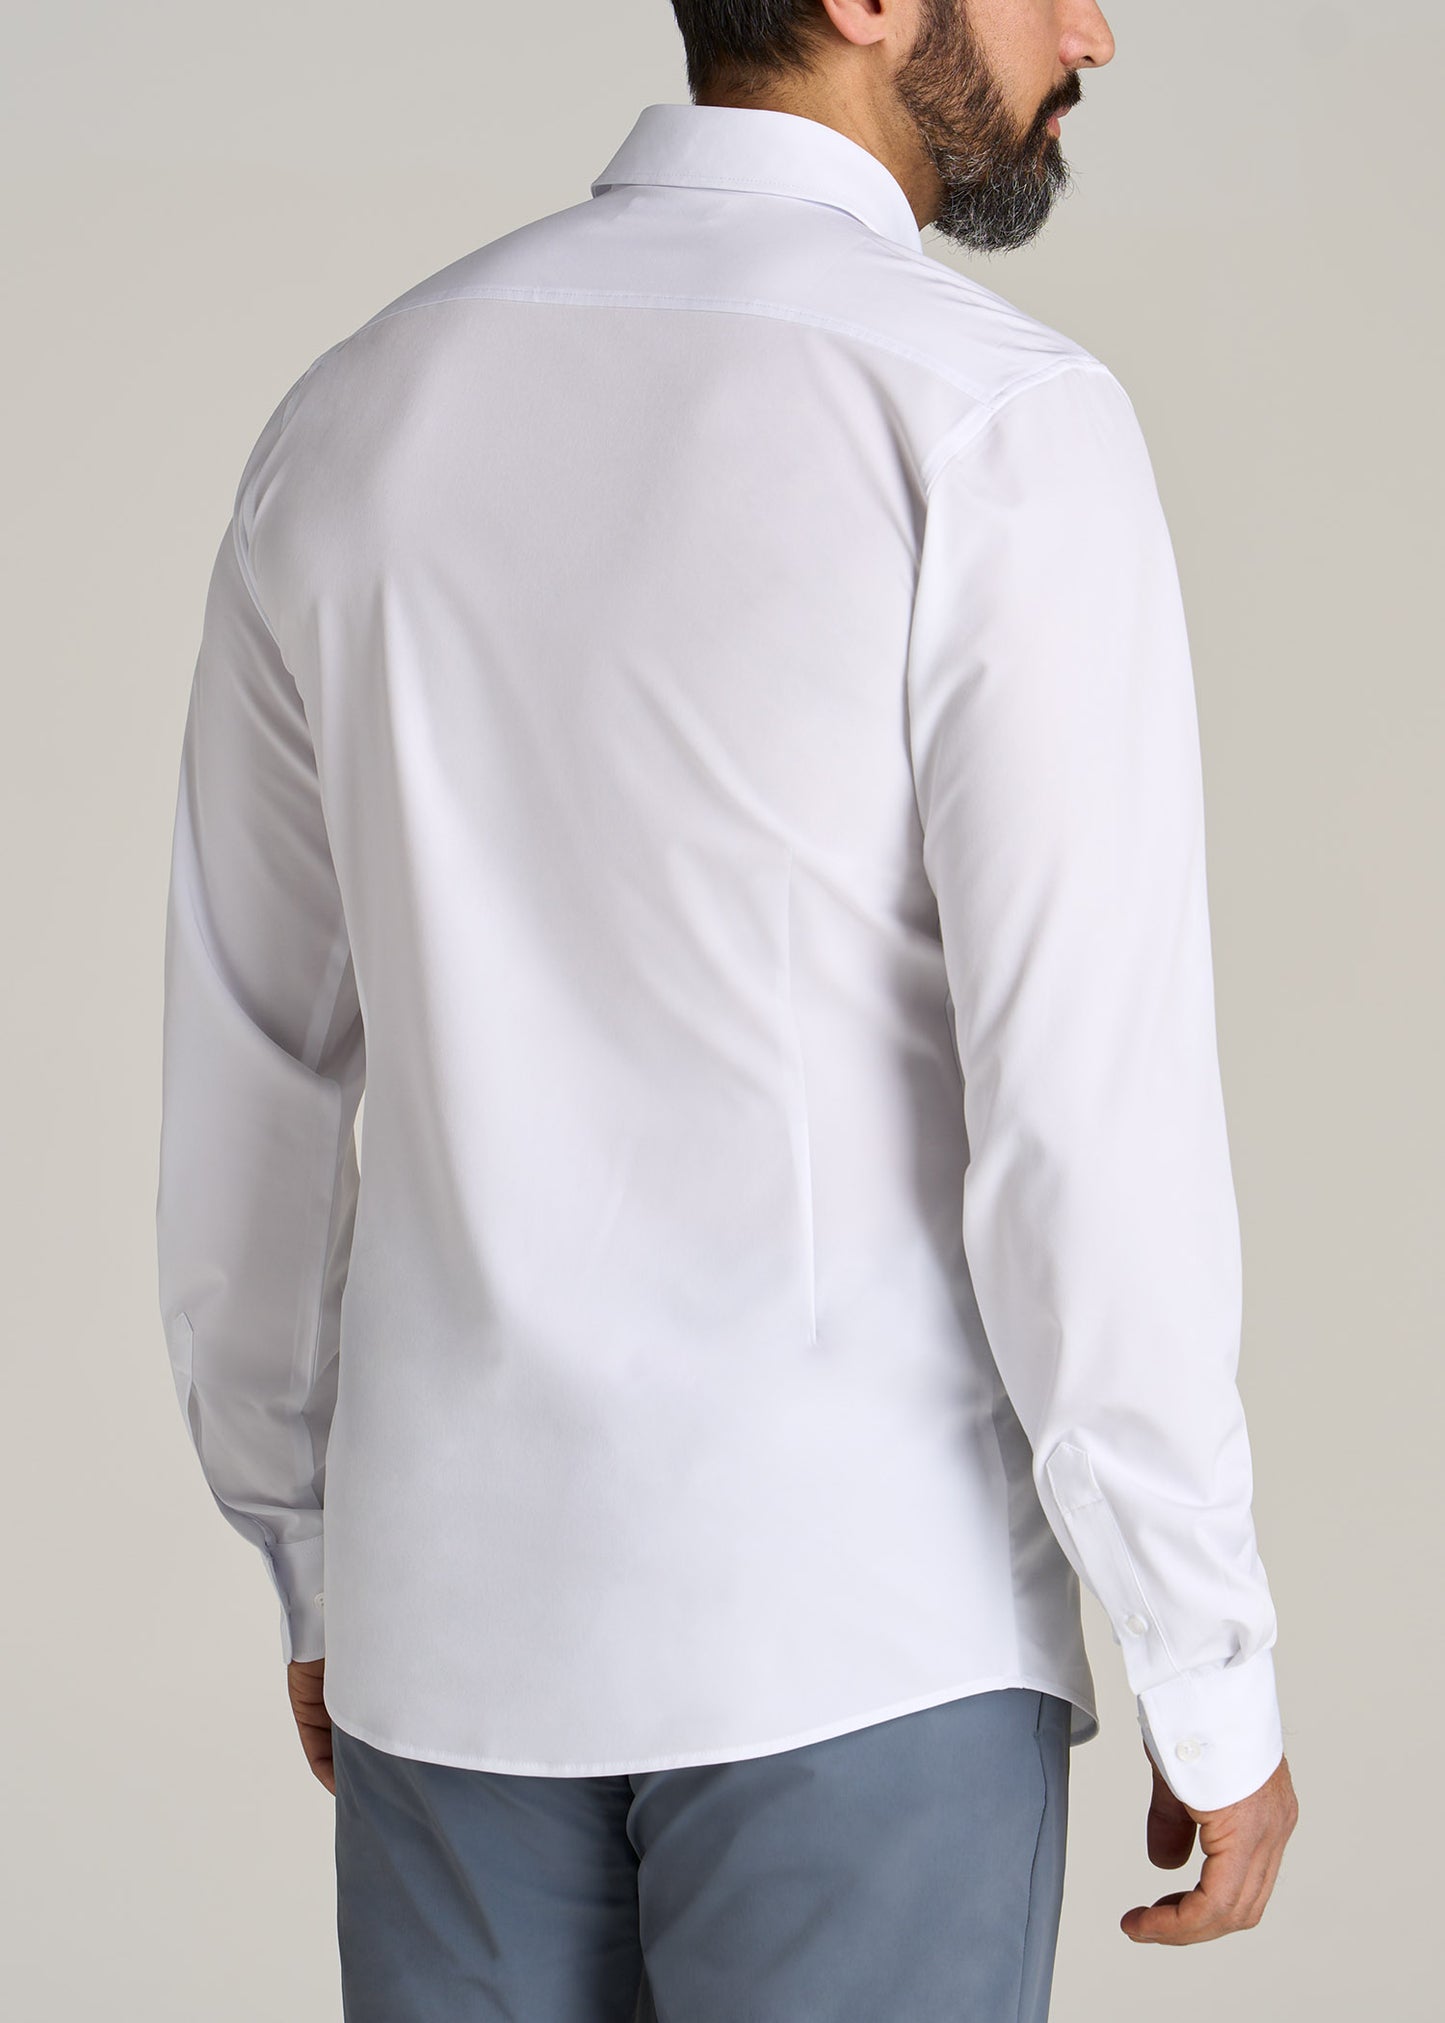 Men's Tall Traveler Stretch Dress Shirt White